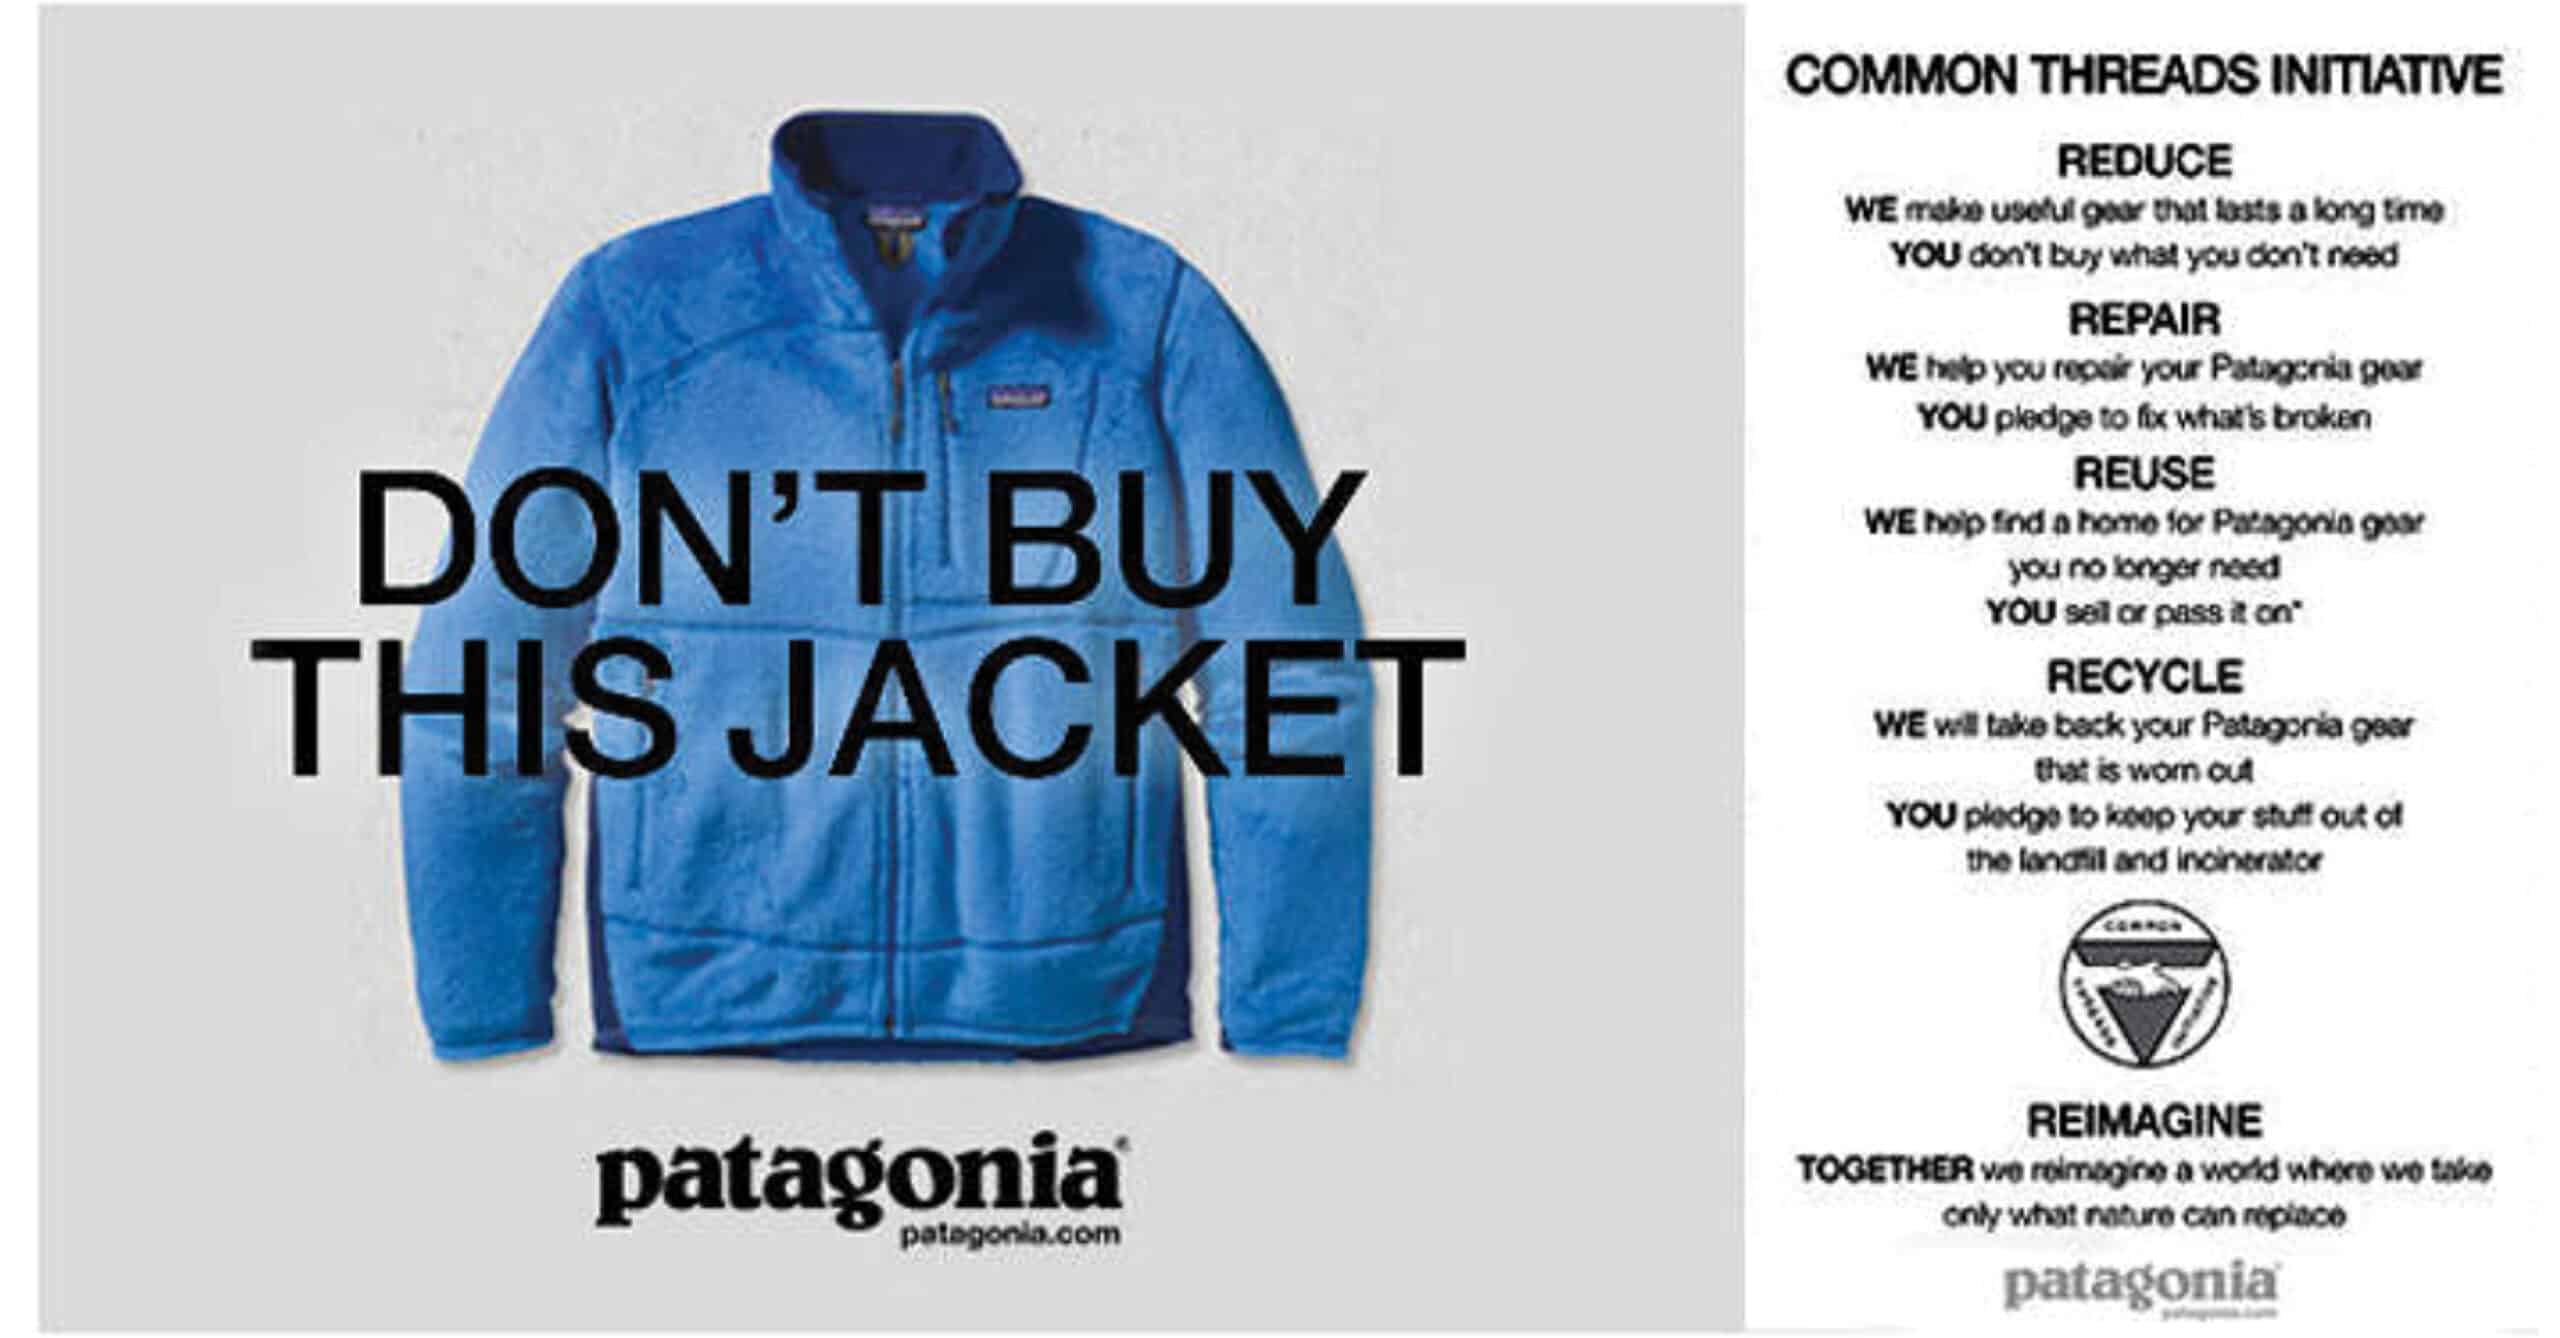 Patagonia "Don't buy this jacket" Ad